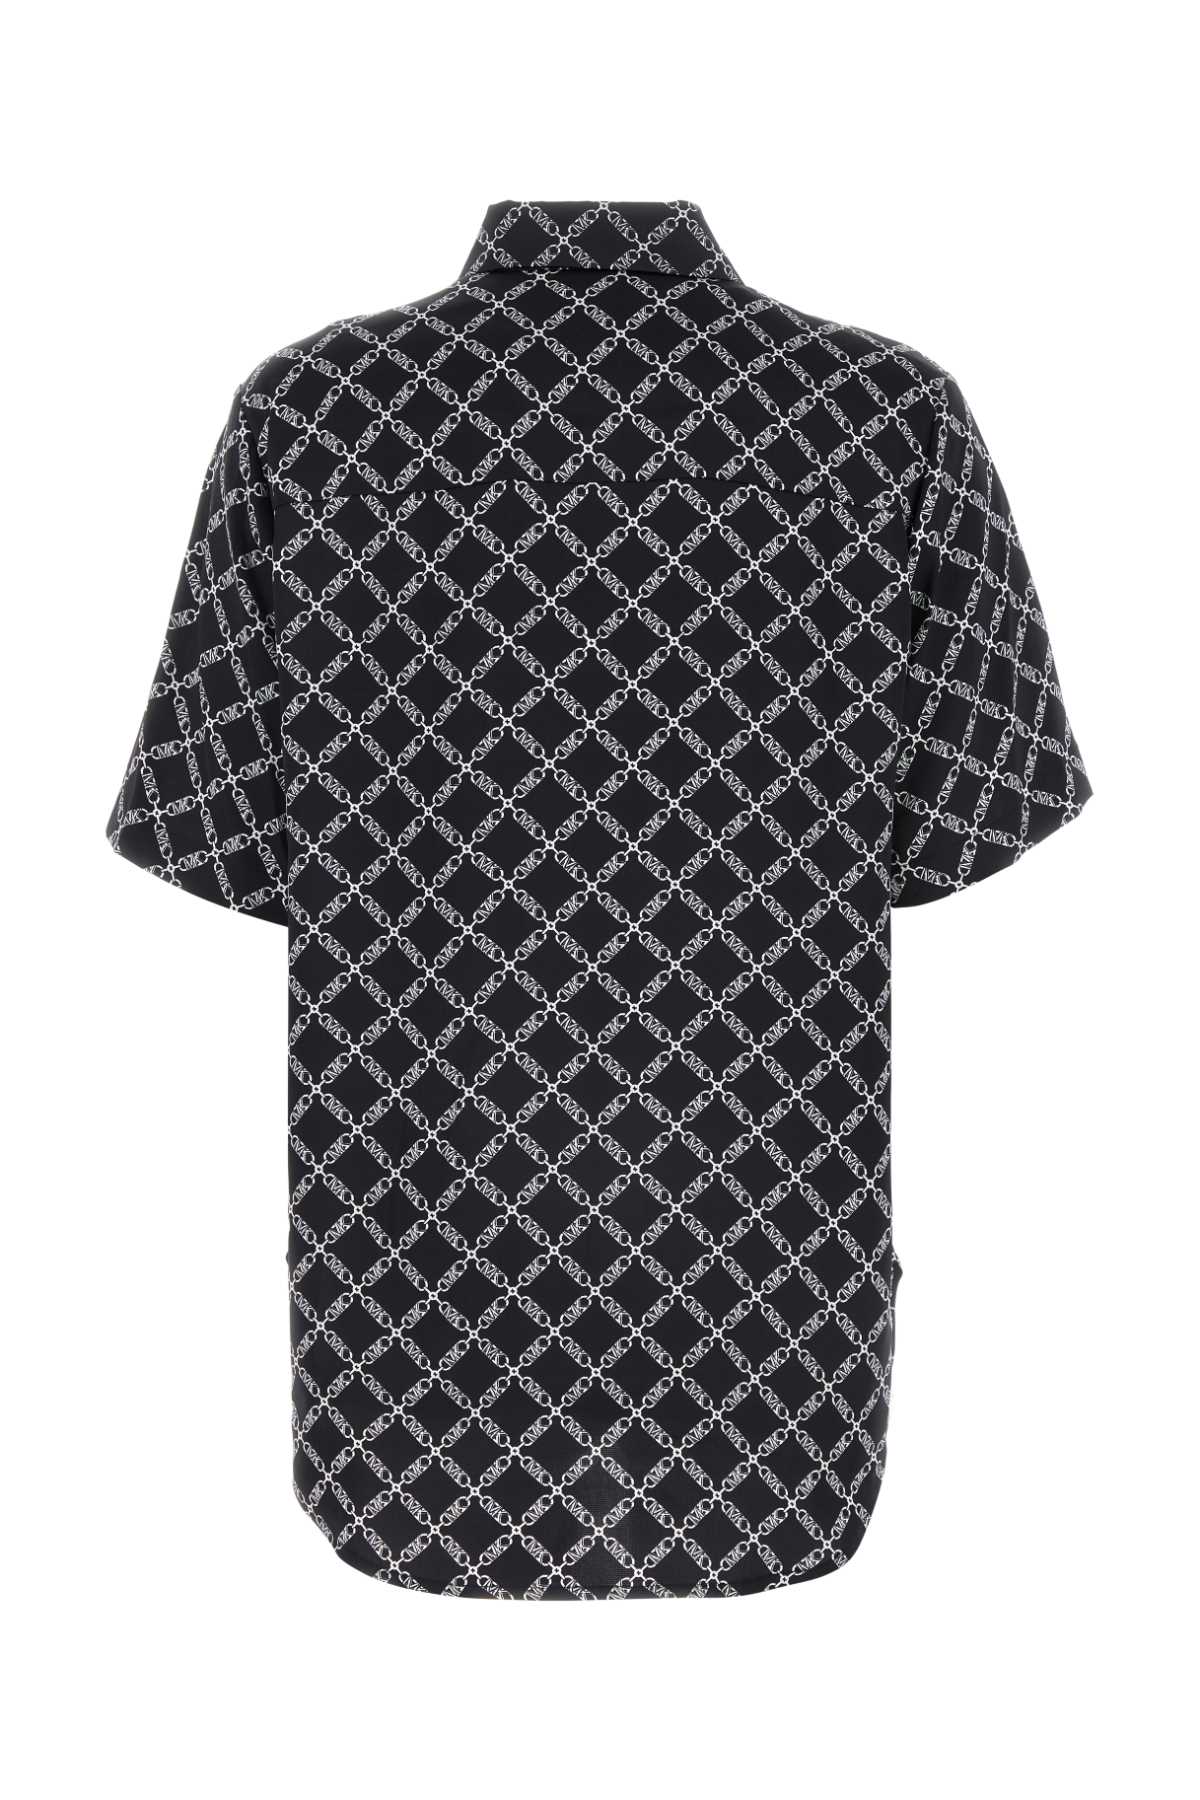 Michael Kors Printed Satin Shirt In Blackwhite